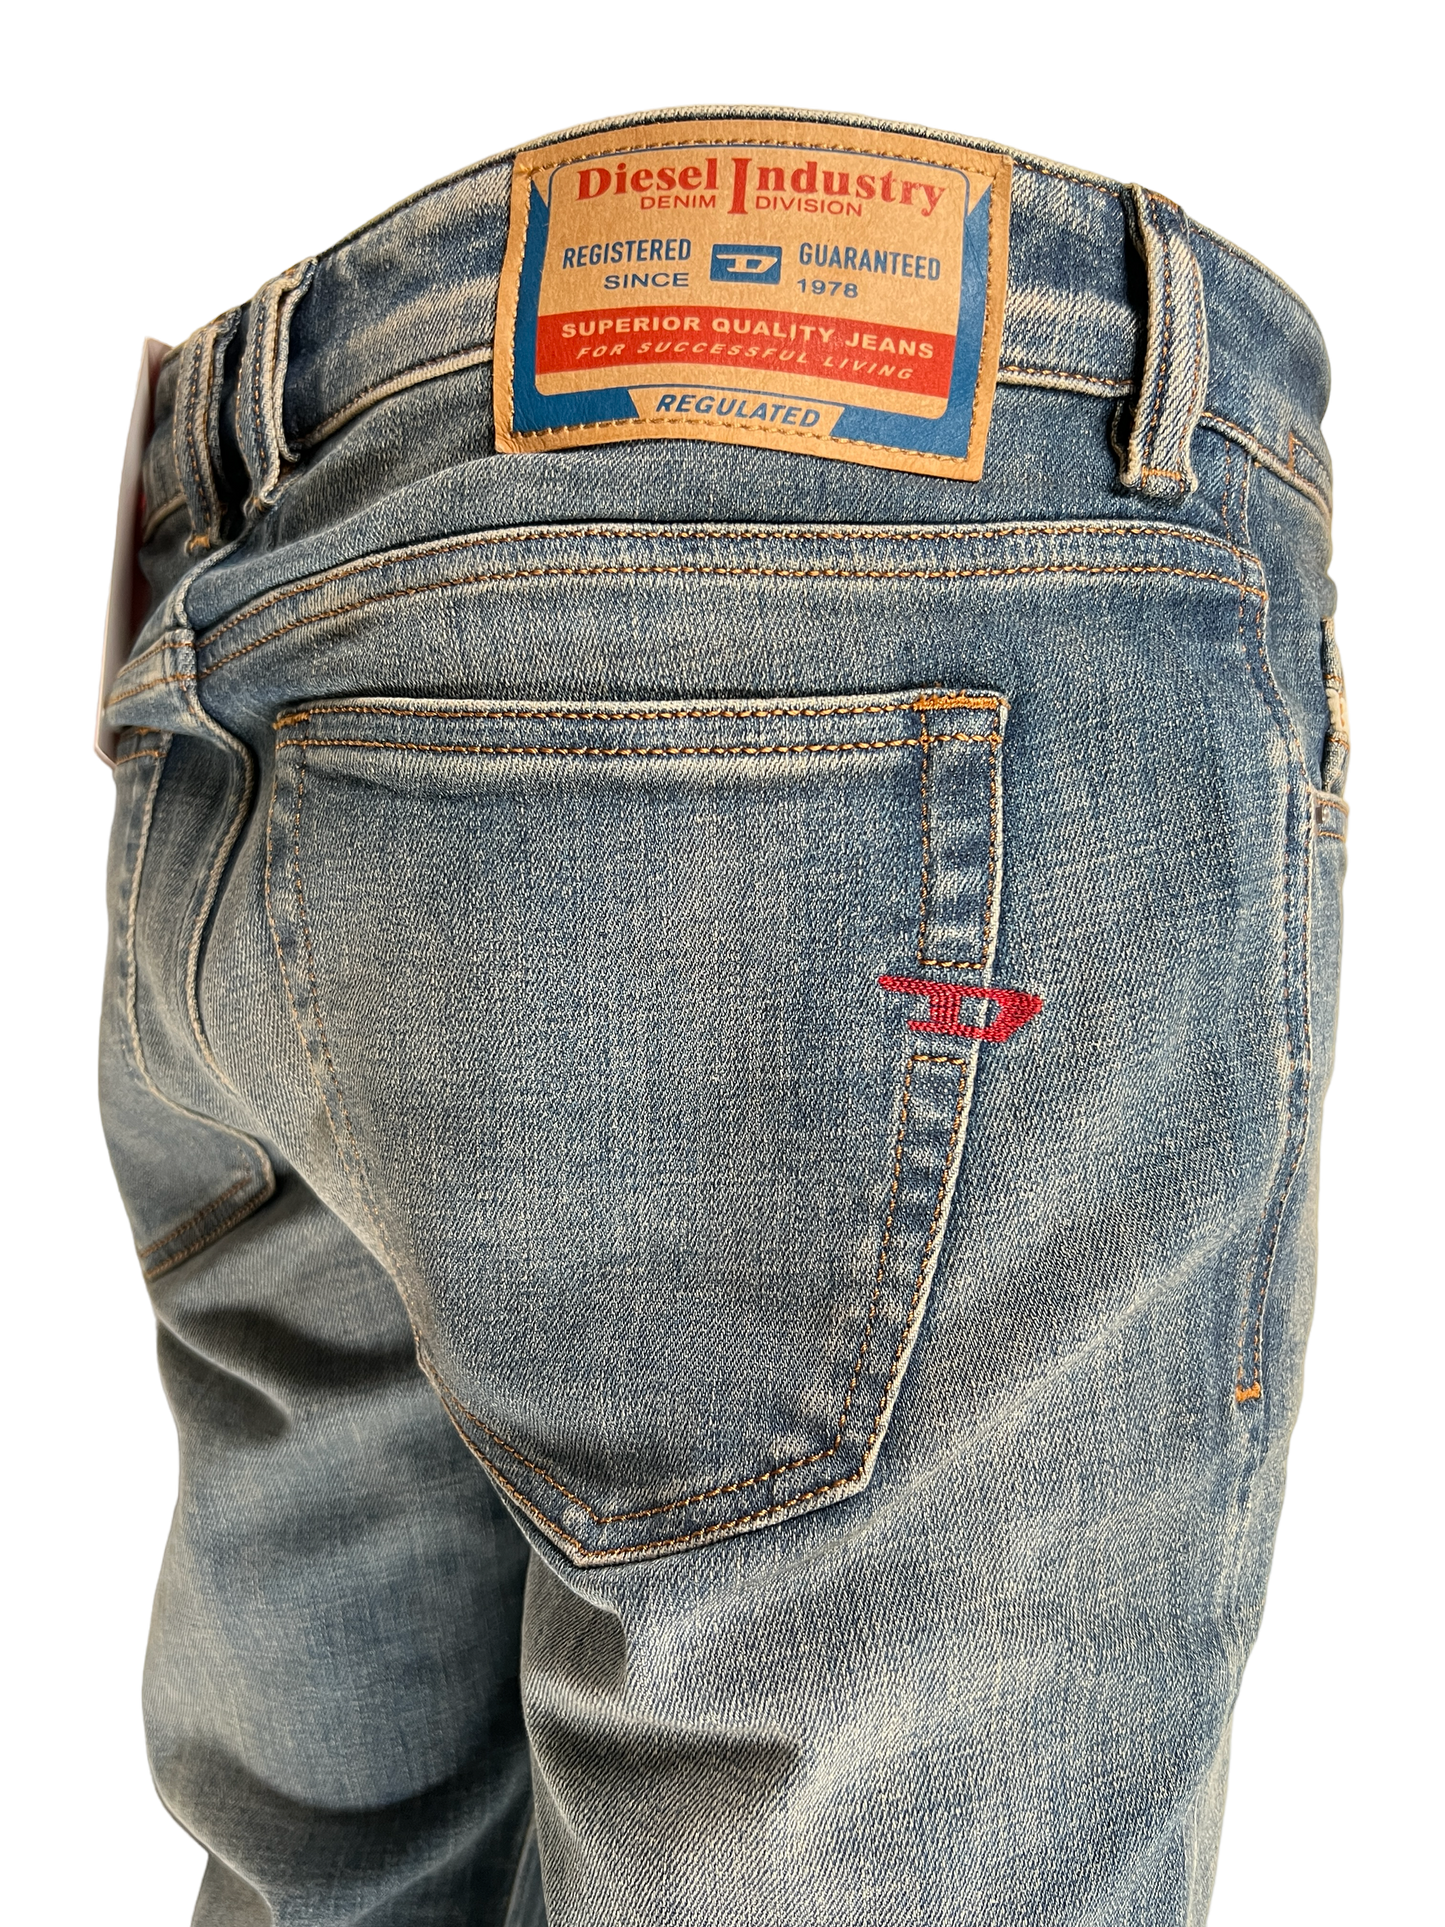 The back pocket of a pair of DIESEL slim fit jeans.